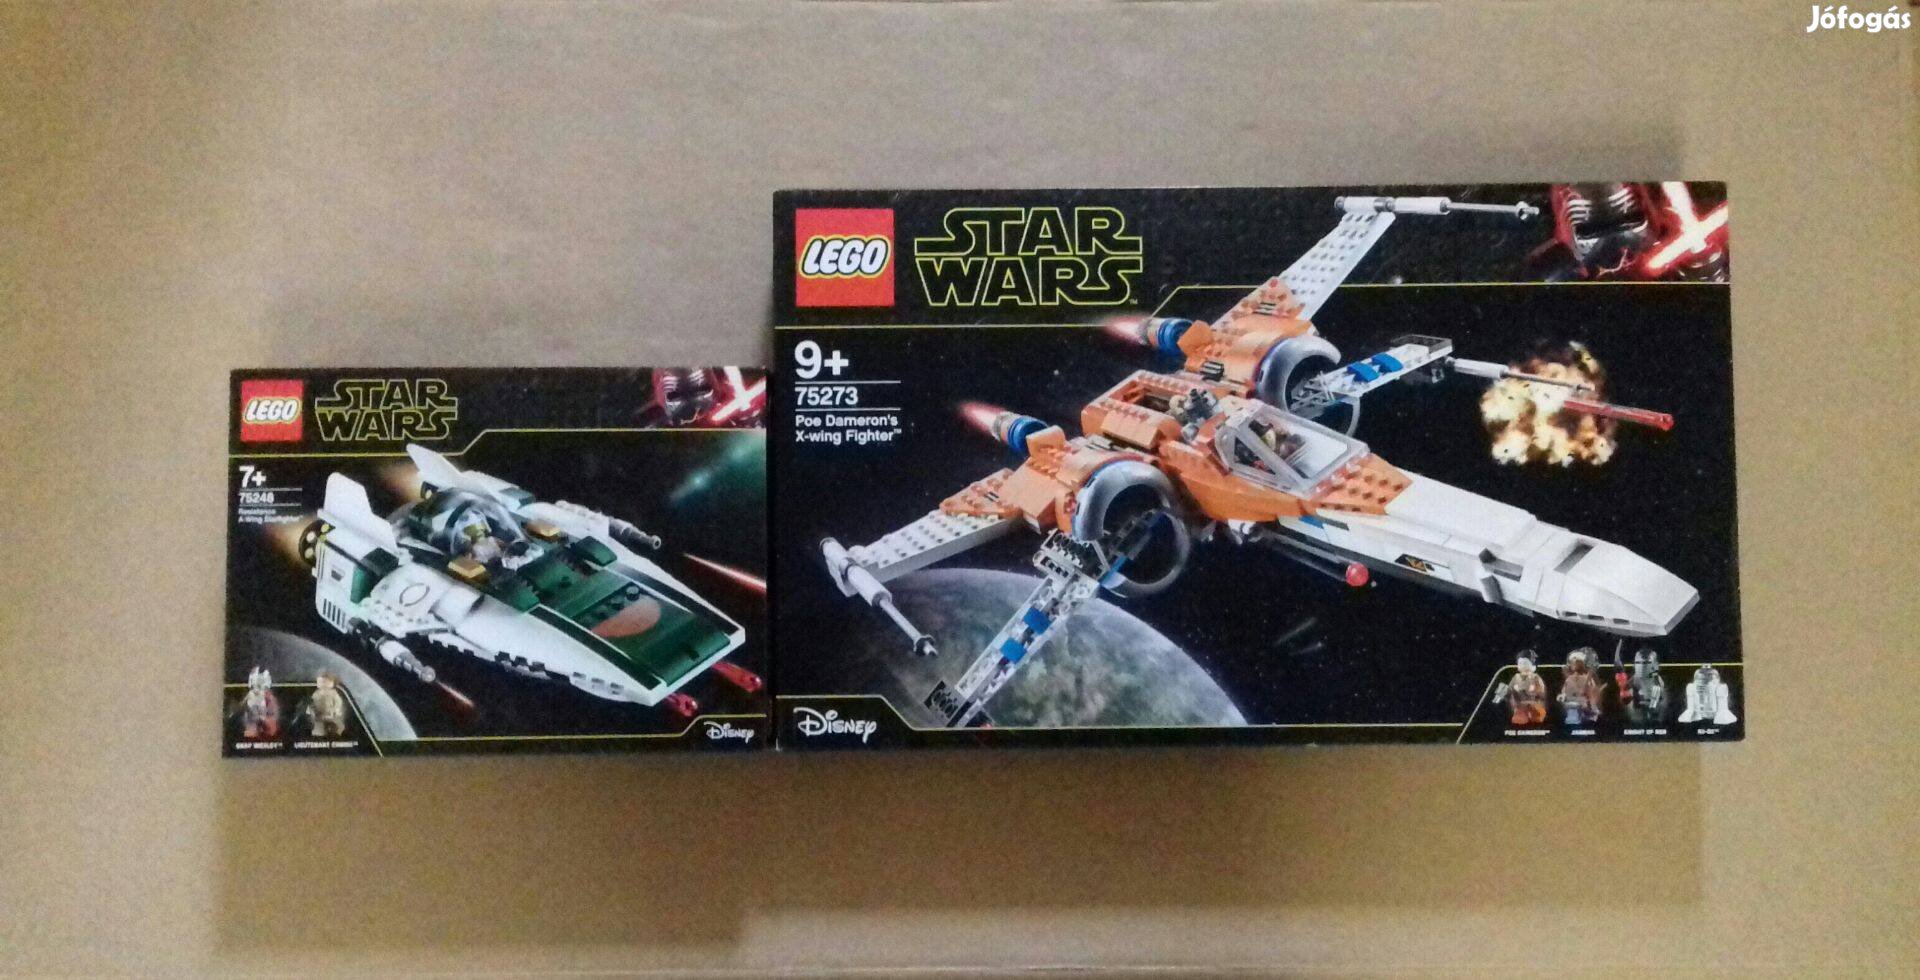 Skywalker kora bontatlan Star Wars LEGO 75248 A-wing + 75273 X Fox.azá